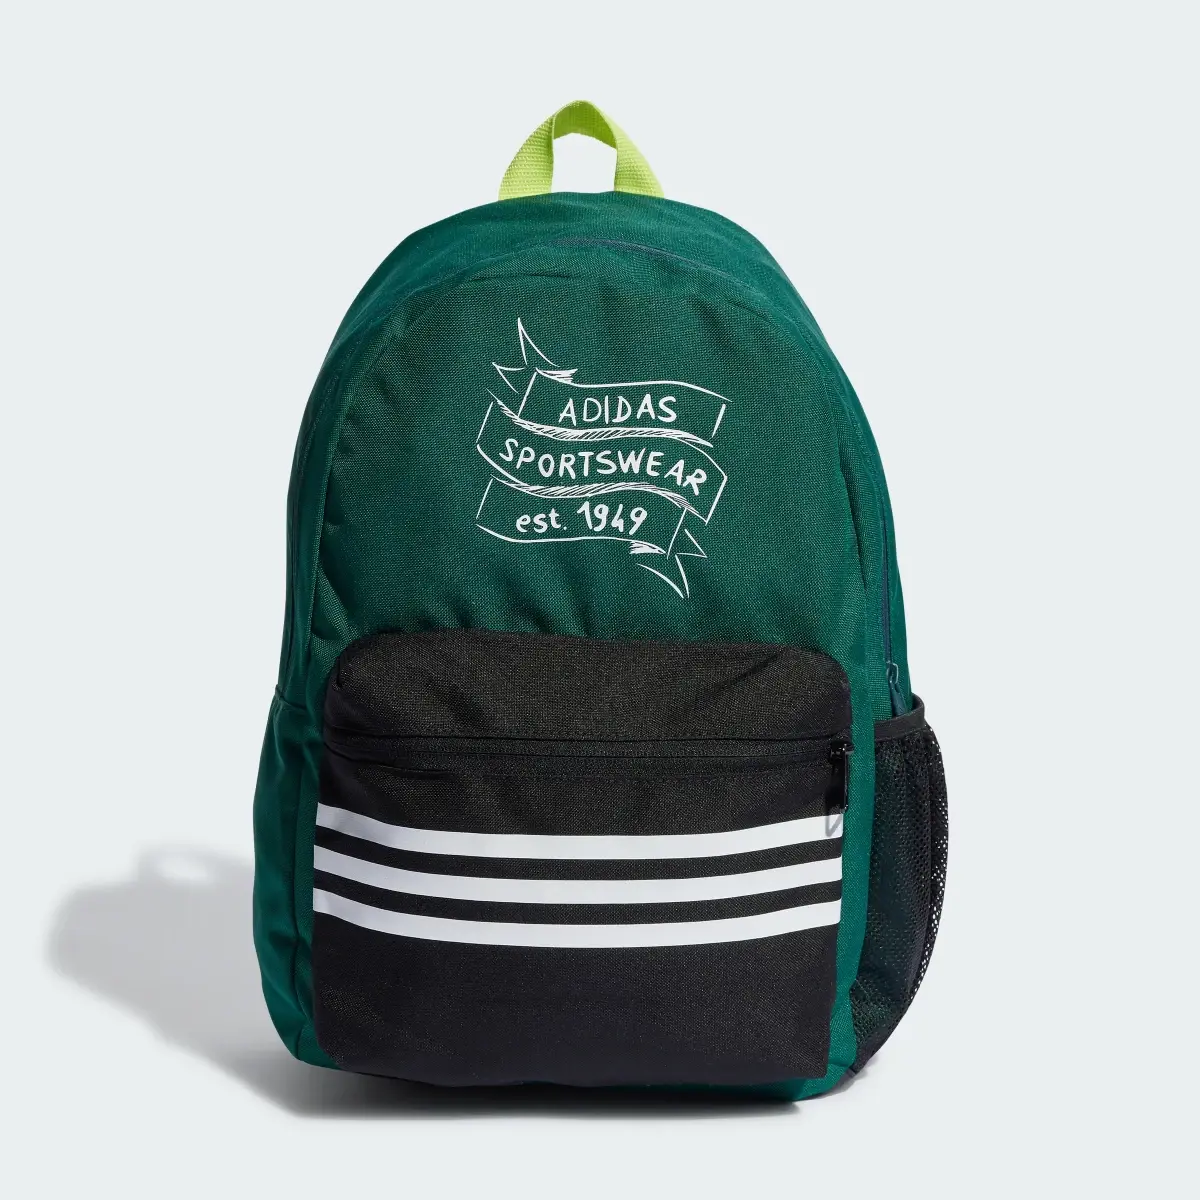 Adidas Brand Love Backpack. 2